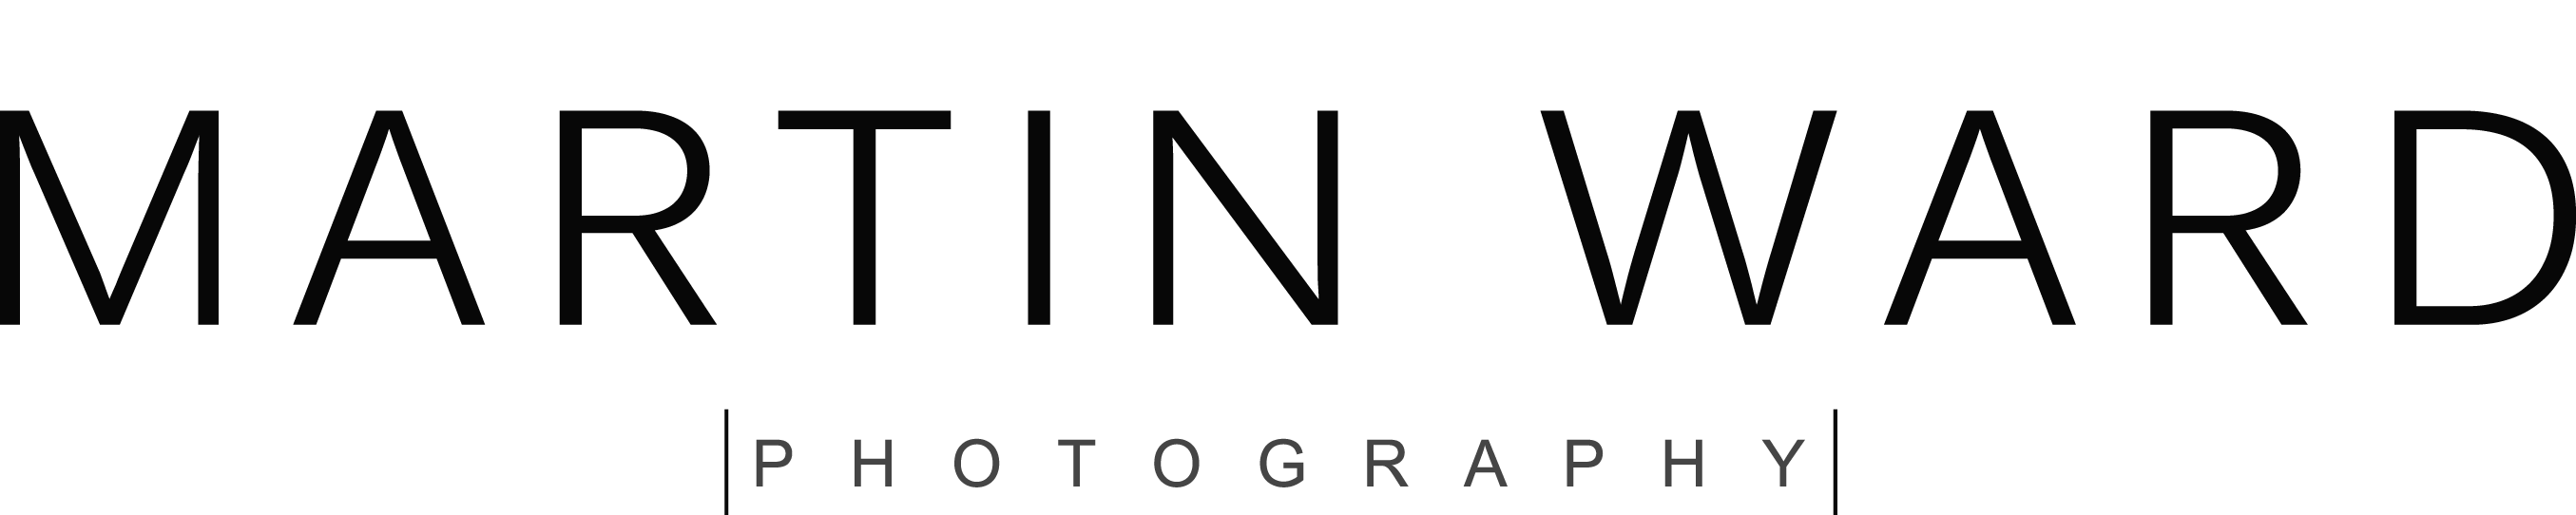 Martin Ward Photography Black Overlay Logo